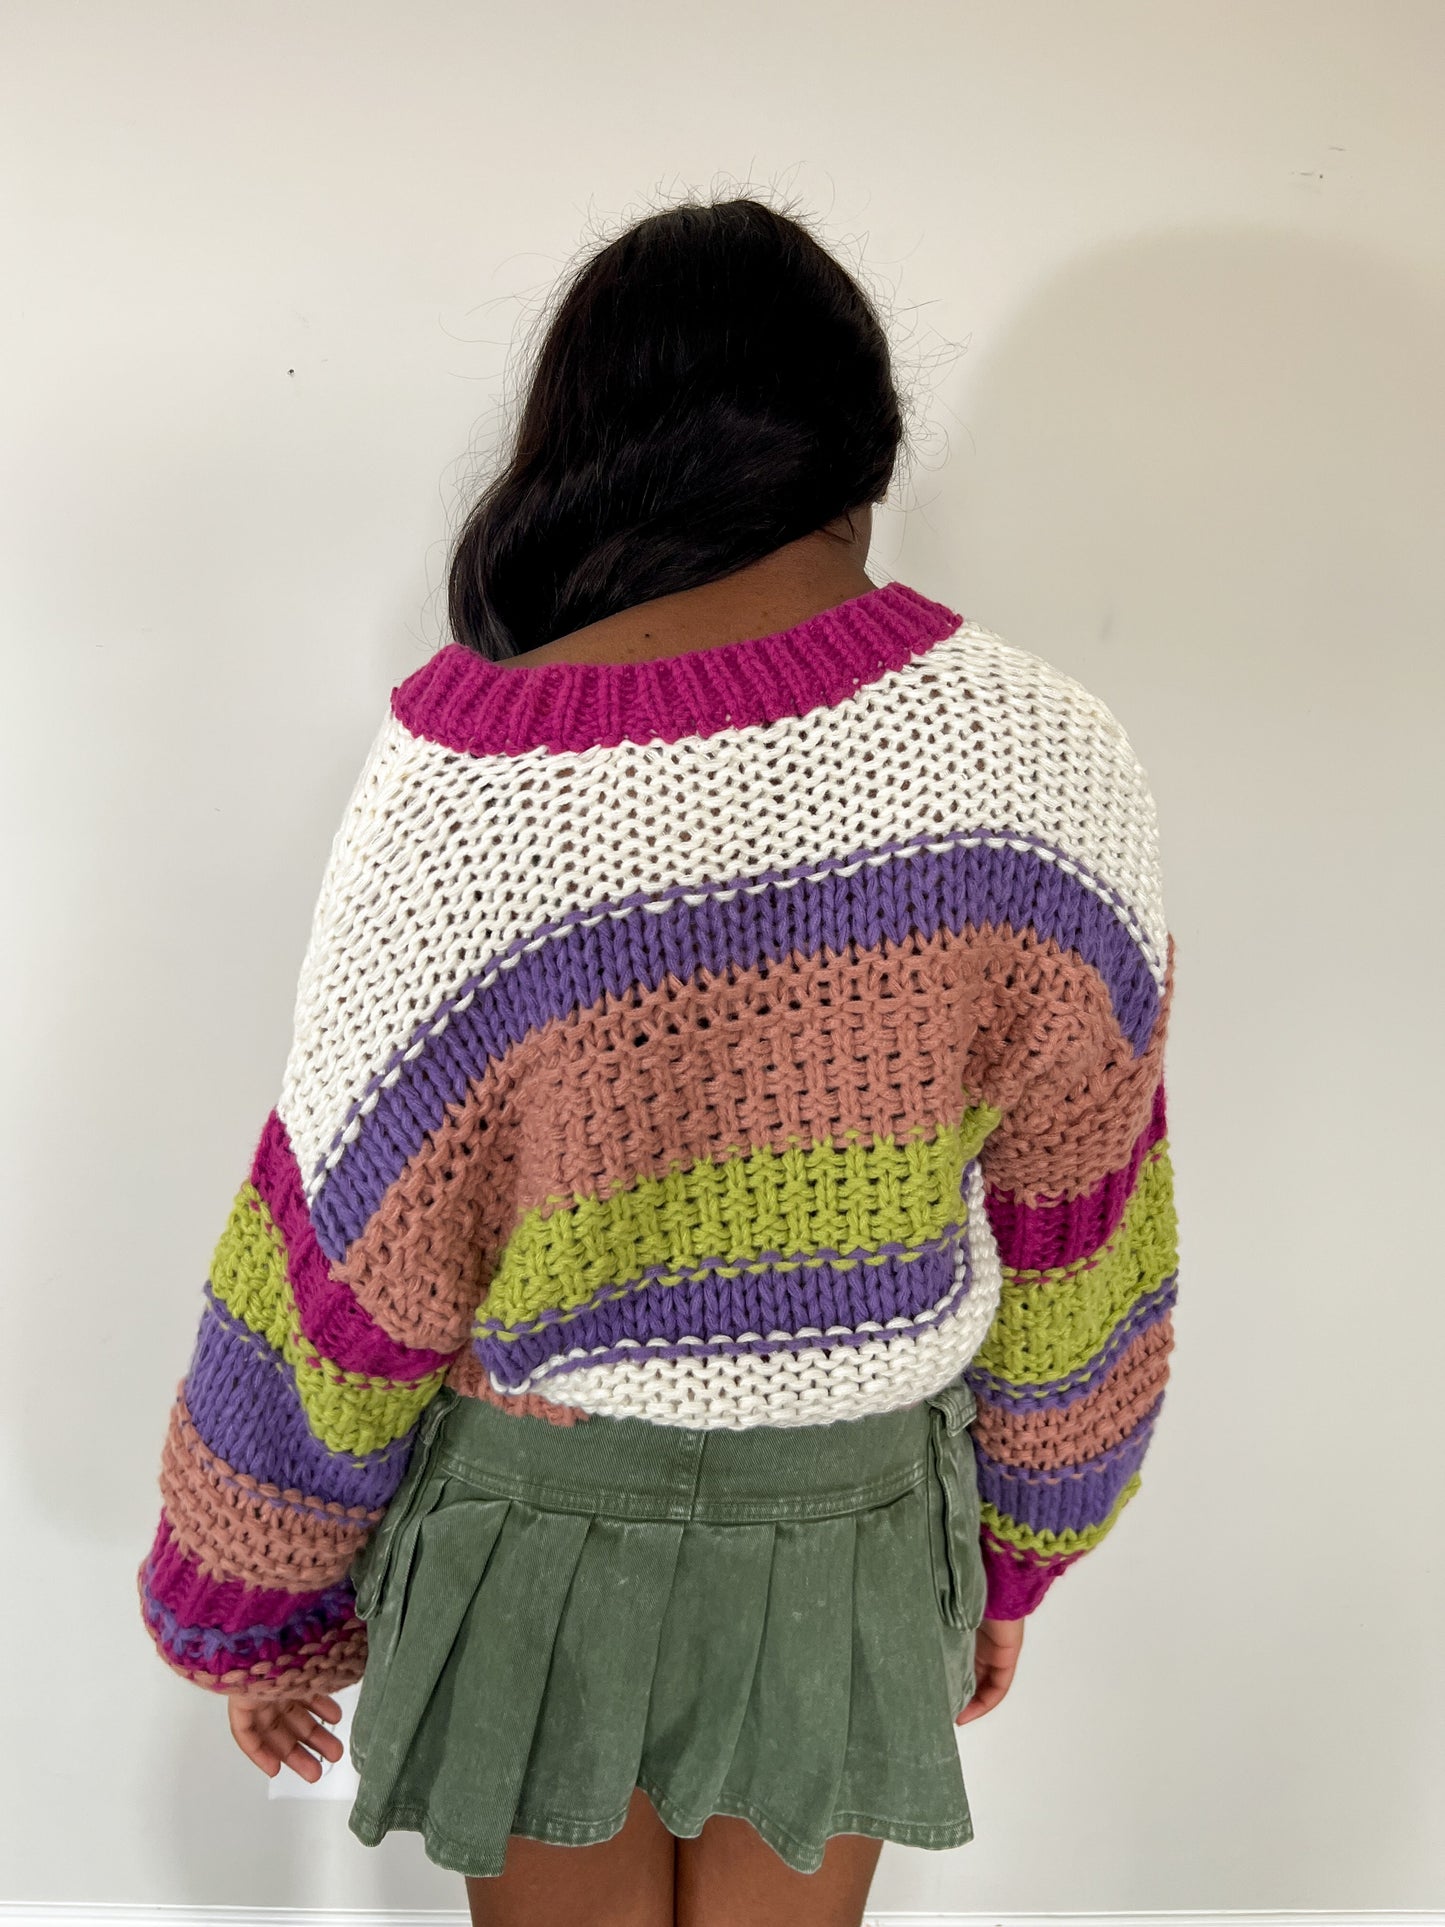 Sydney Multicolored Cropped Women's Sweater.